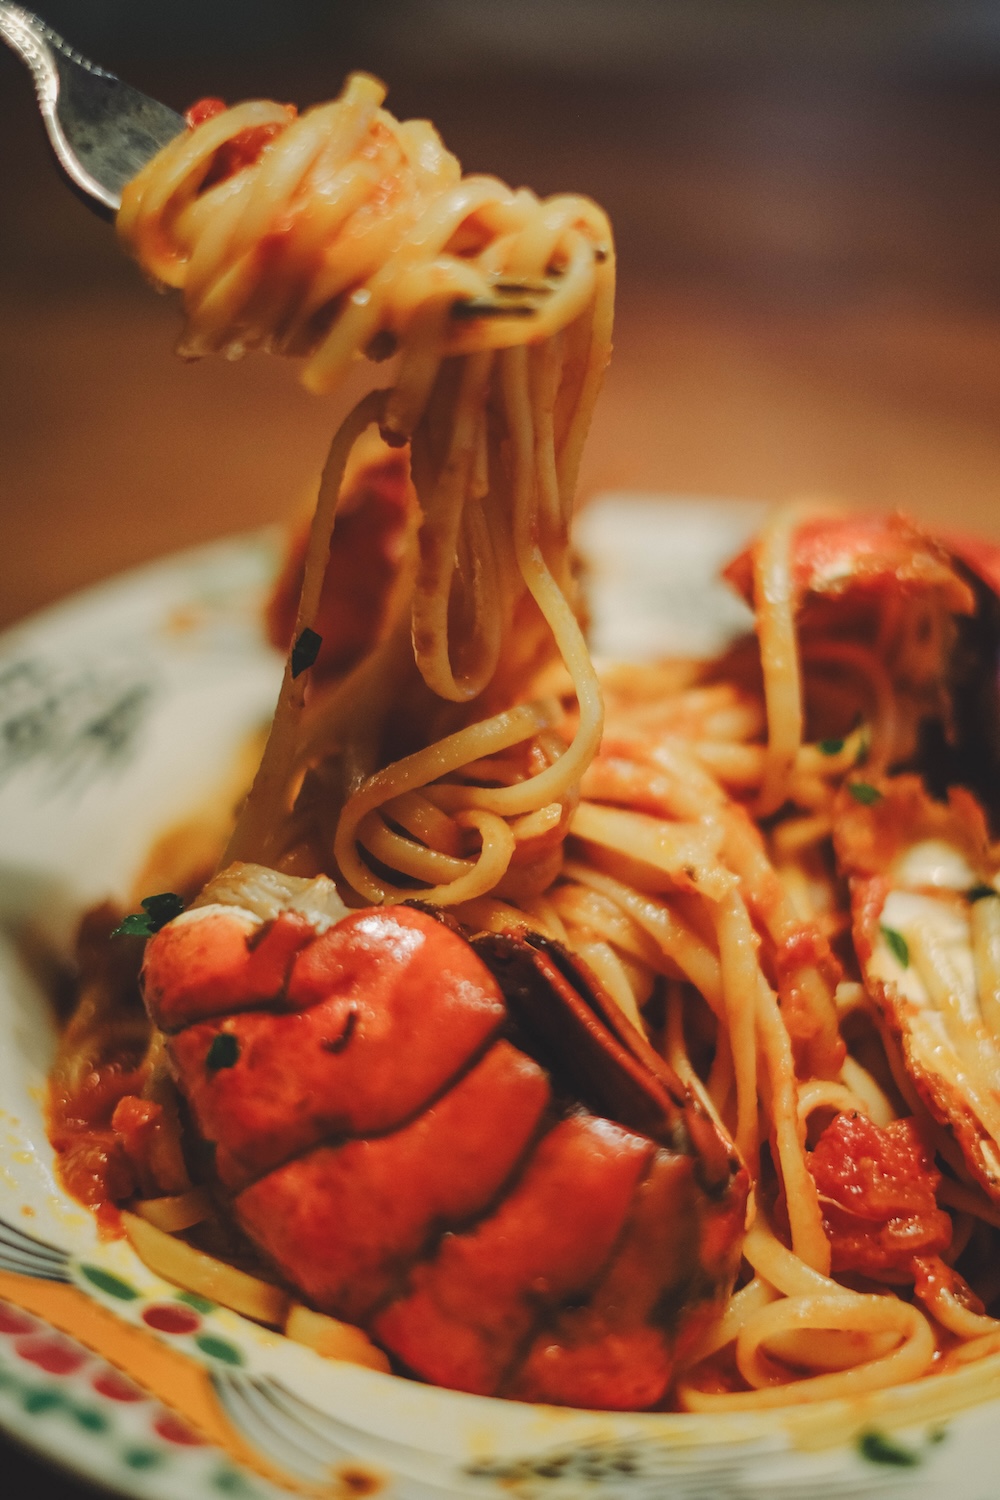 THE ITALIAN TABLES：東京北參道義式餐廳，高質感內裝設計＆首推龍蝦番茄義大利麵